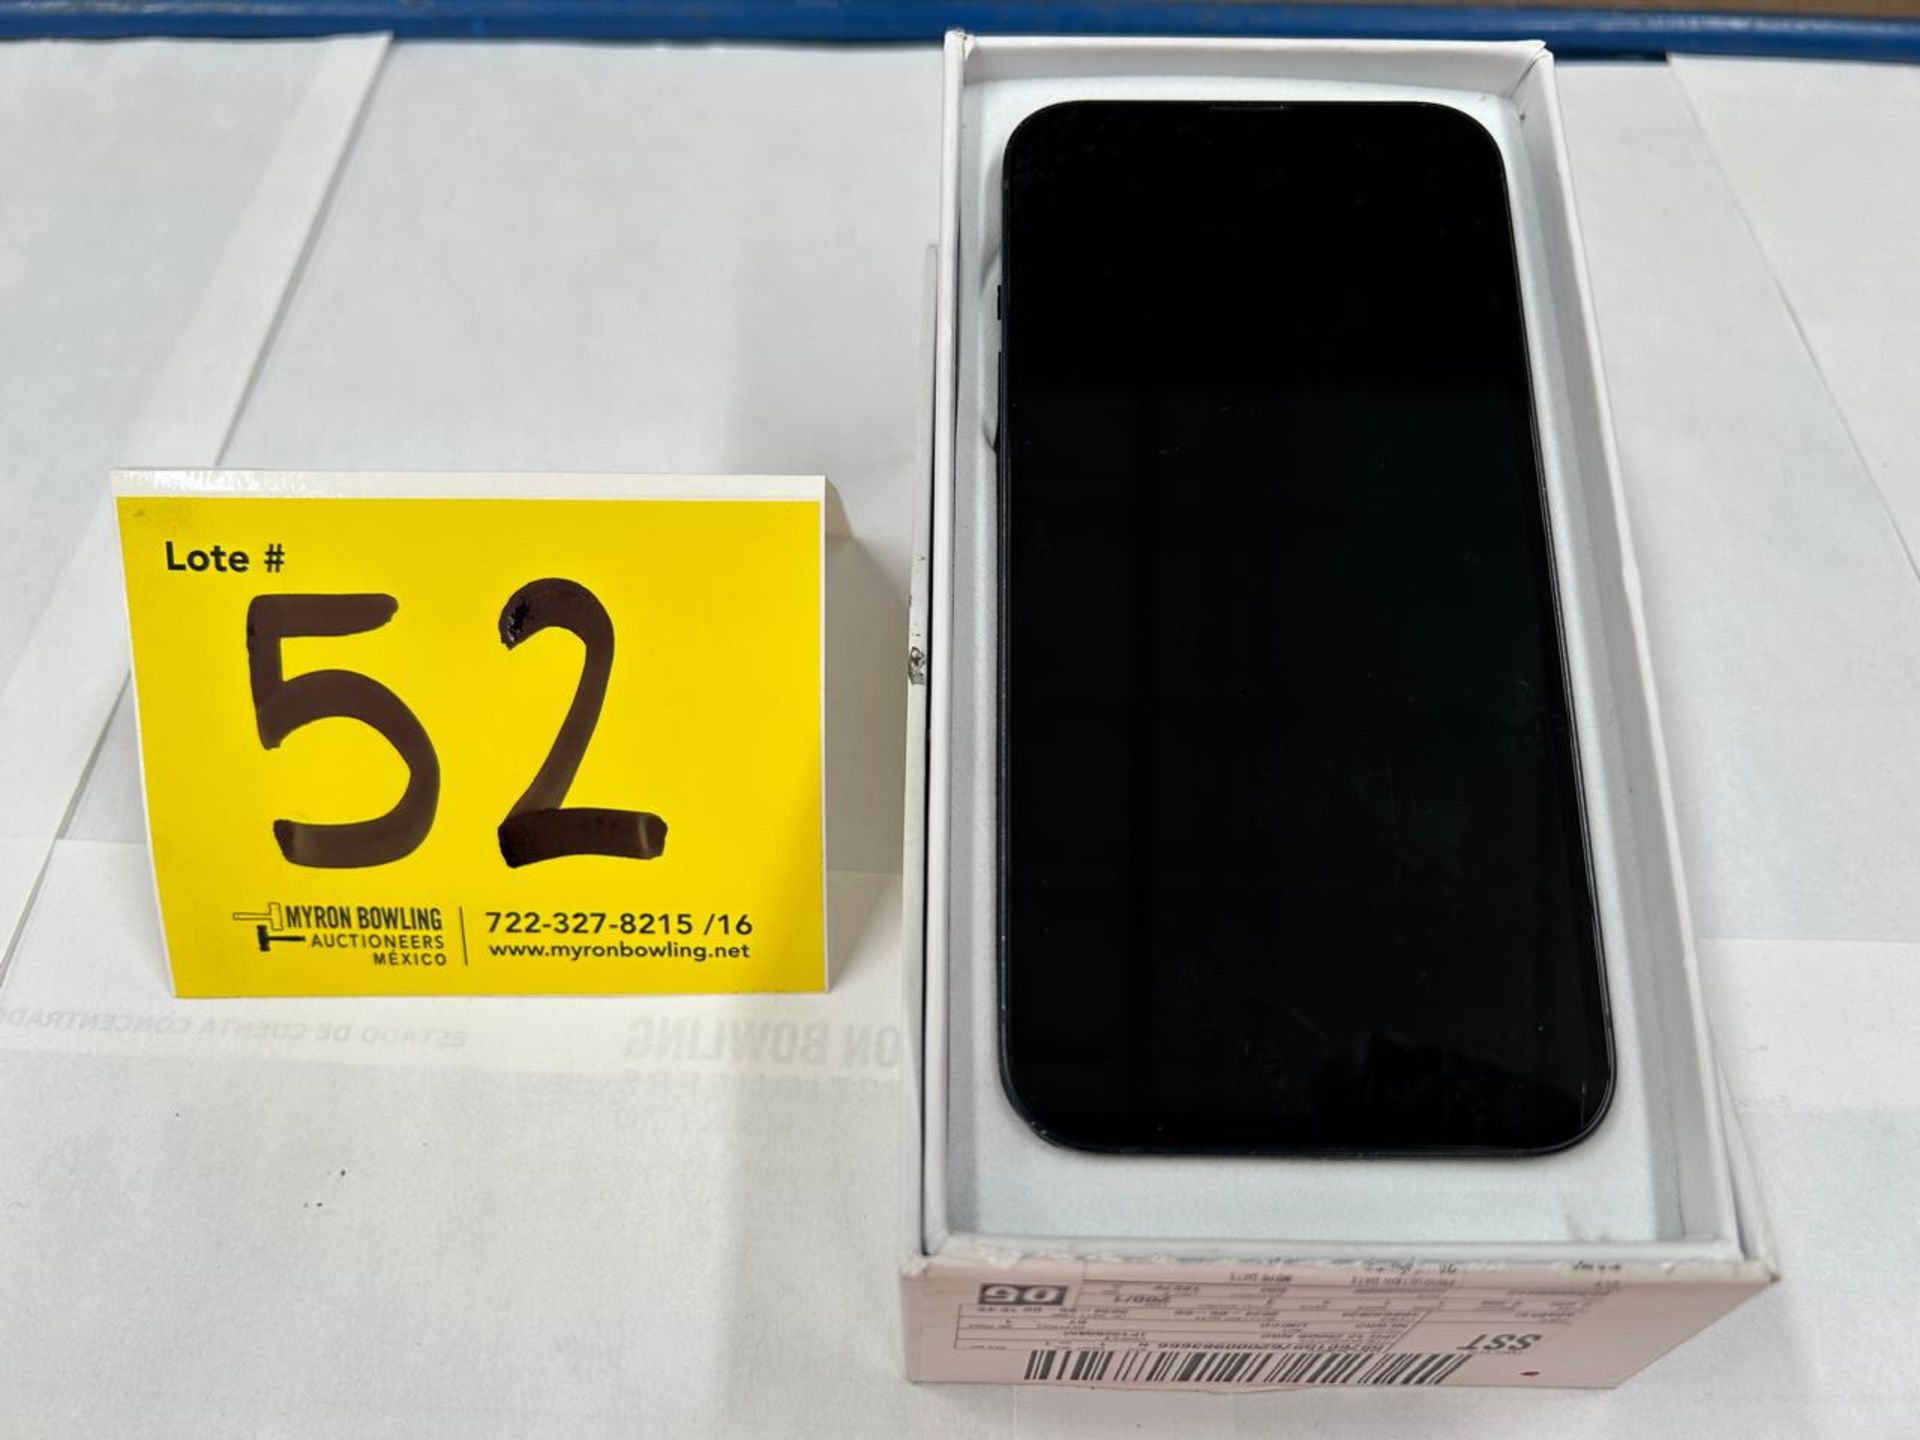 Celular Marca APPLE, Modelo iPhone 13, con capacidad de 256 GB, Color NEGRO (IMEI 352180444757557) - Image 2 of 4